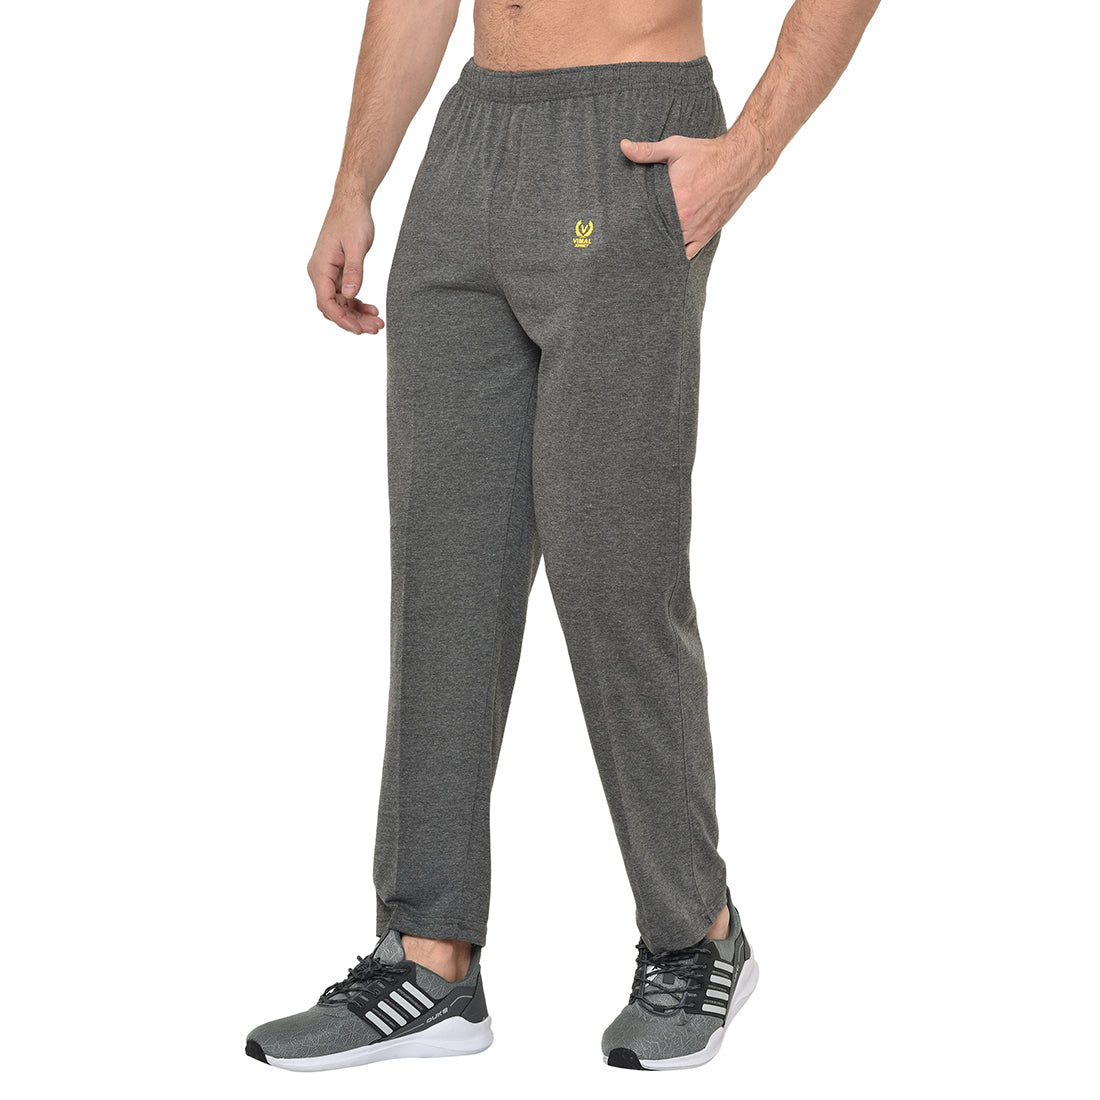 Cuddles - Super Pants Combo Pack - Small (78*2) - S - Buy 156 Cuddles -  Super Pants Pant Diapers | Flipkart.com